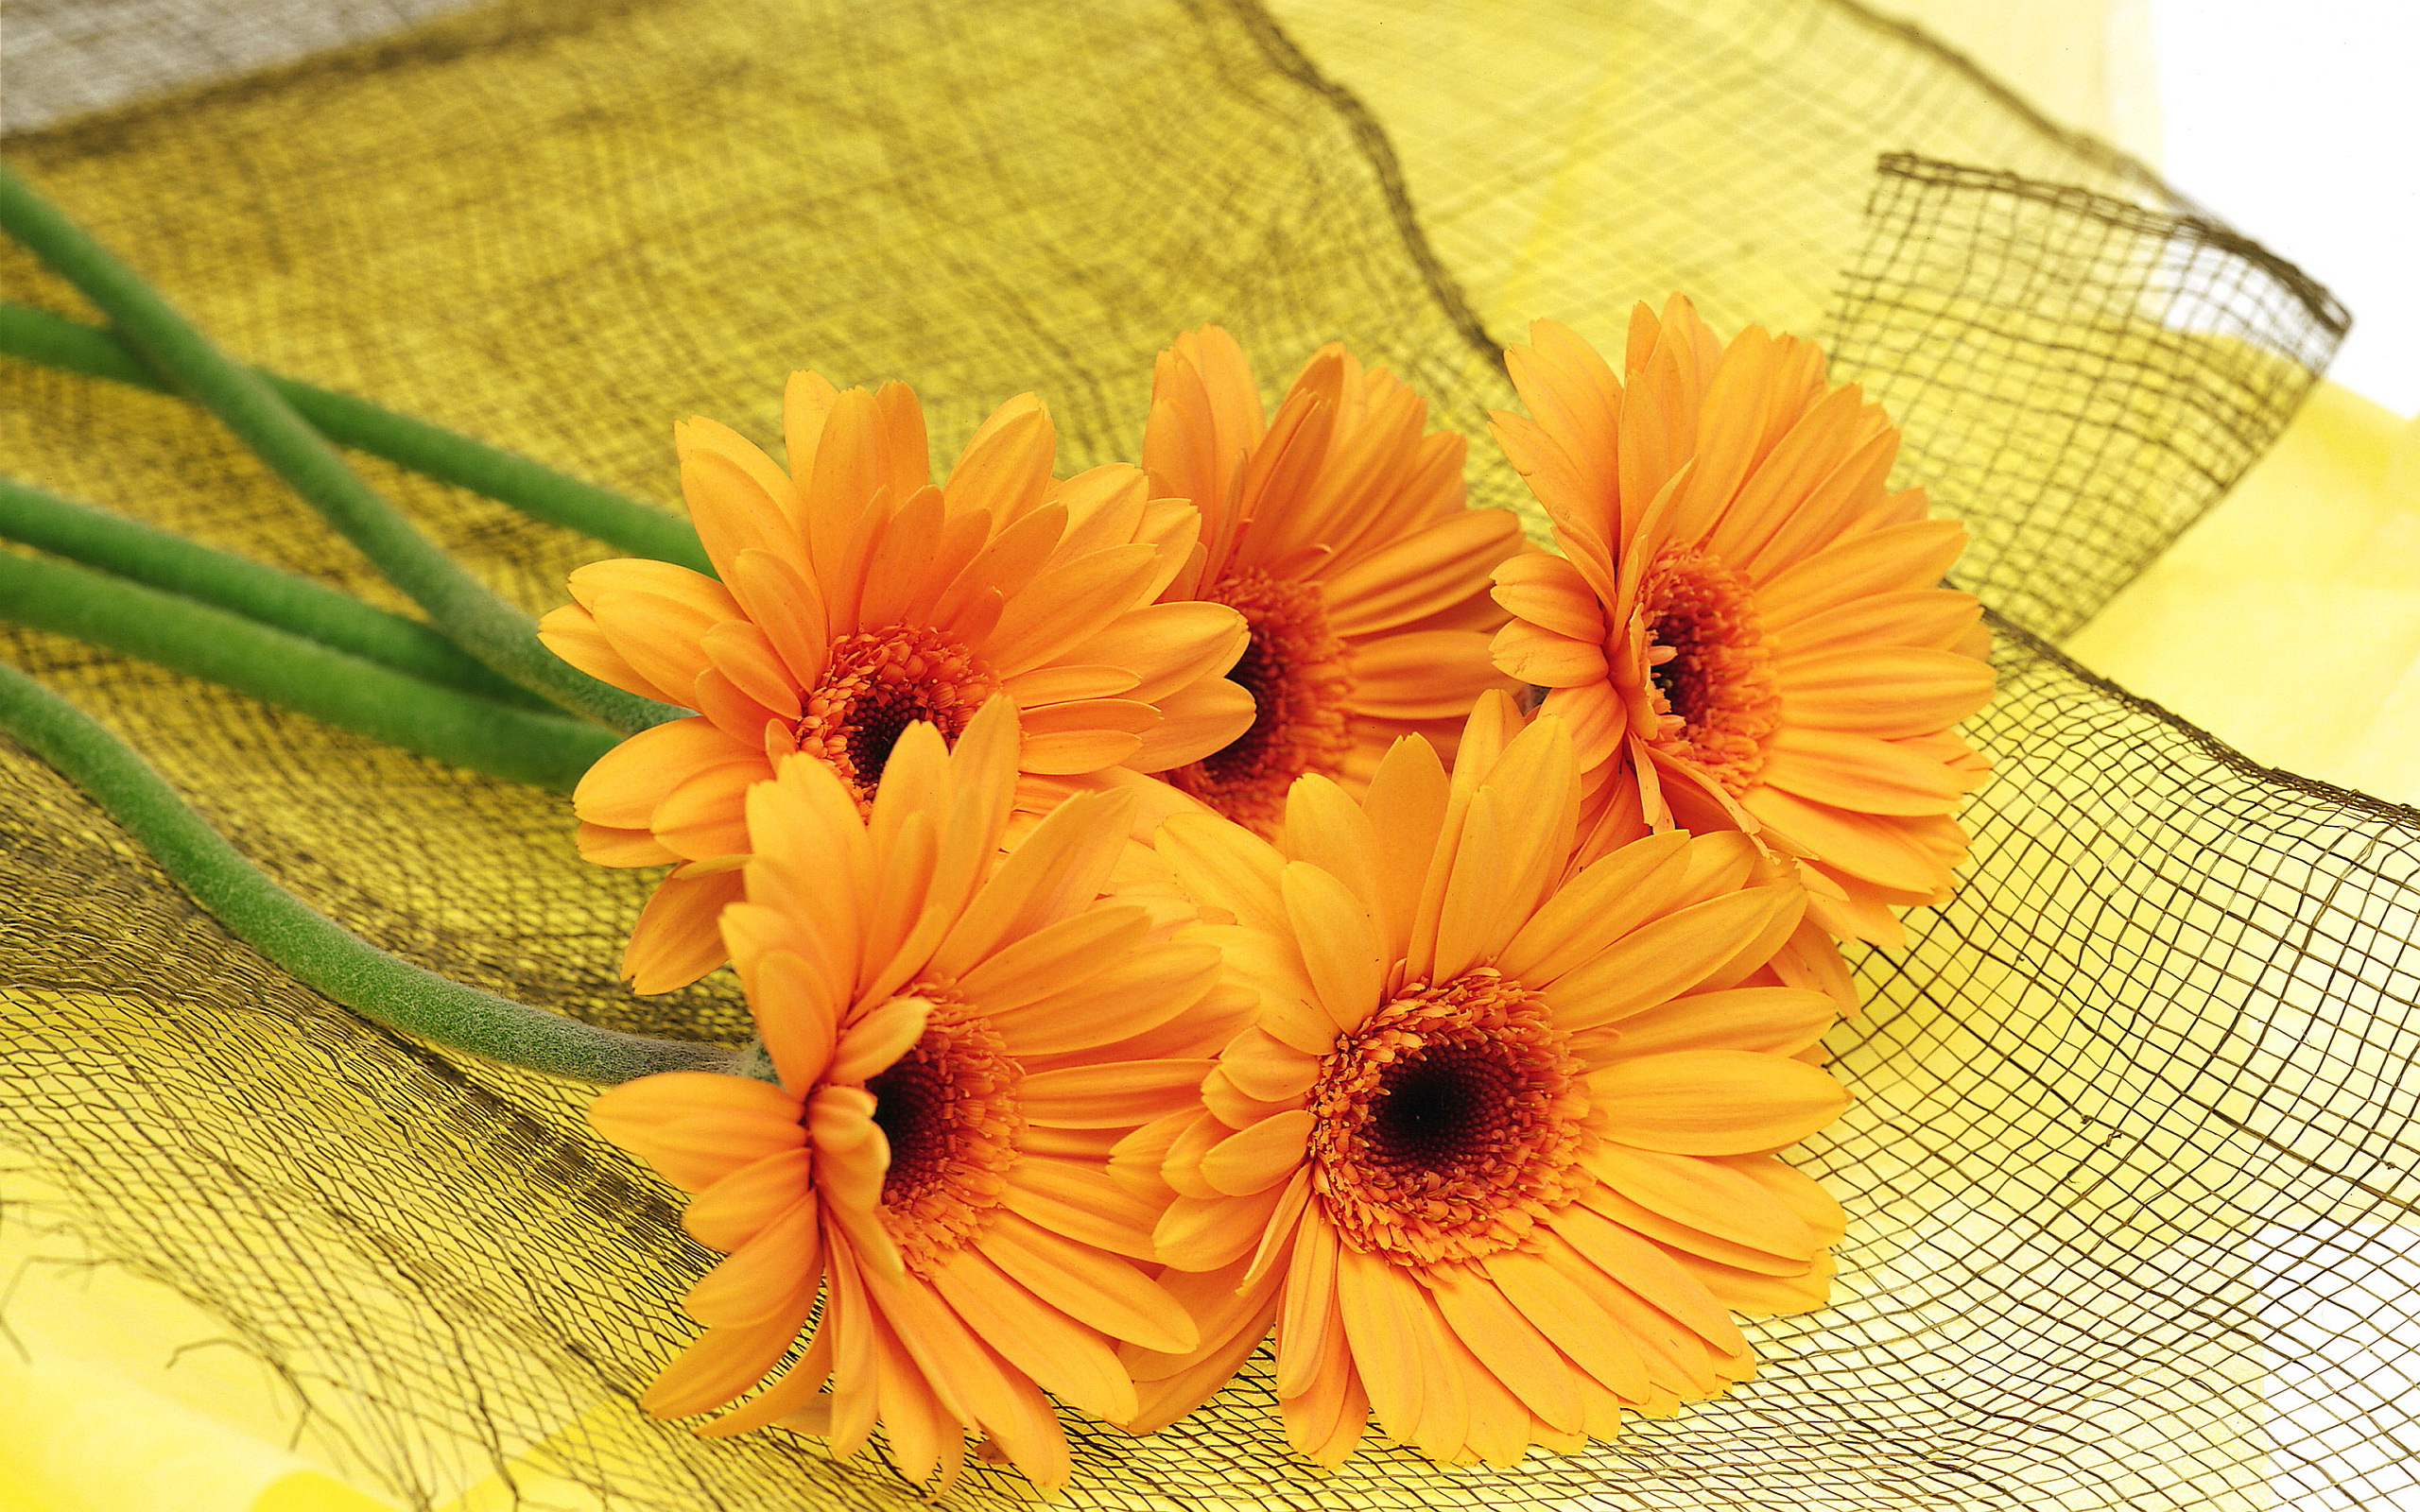 papier peint à fleurs orange,fleur,gerbera,marguerite de barberton,orange,jaune